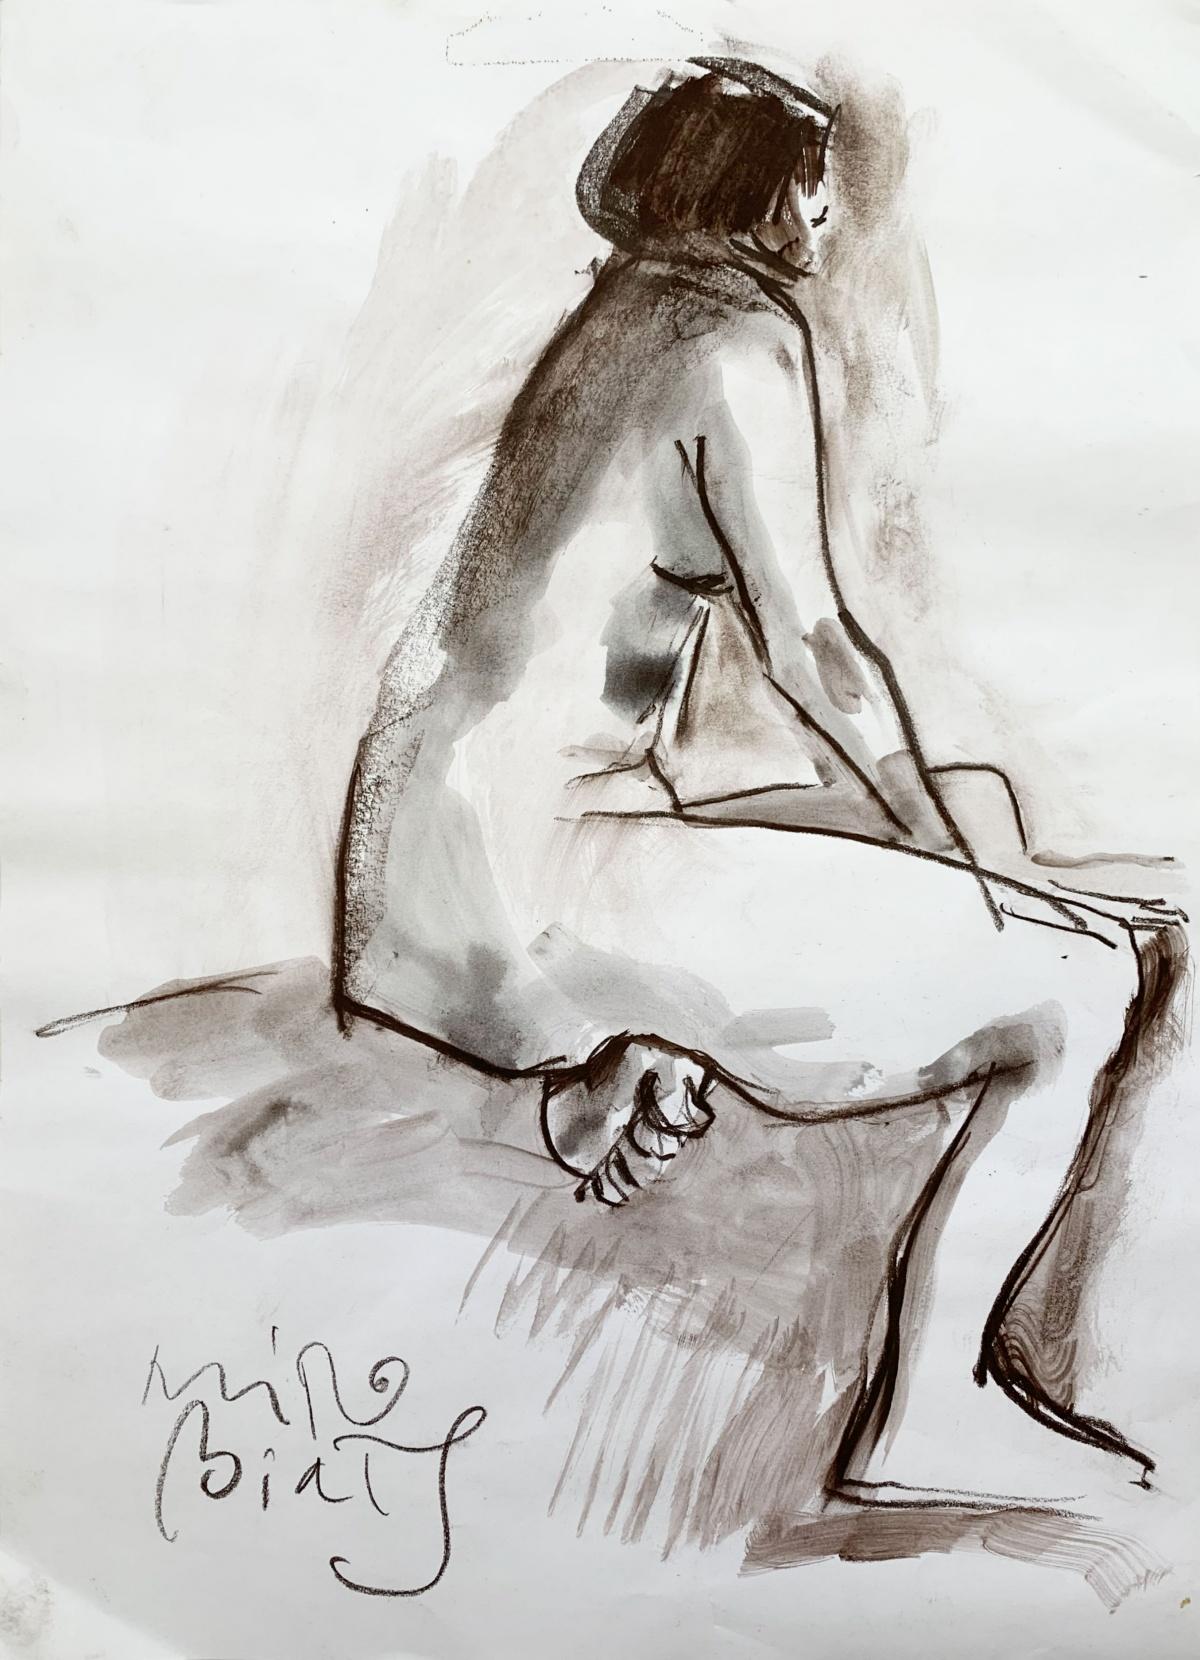 Miro Biały Figurative Art - Nude - Contemporary figurative watercolor painting, Black & white, Polish art